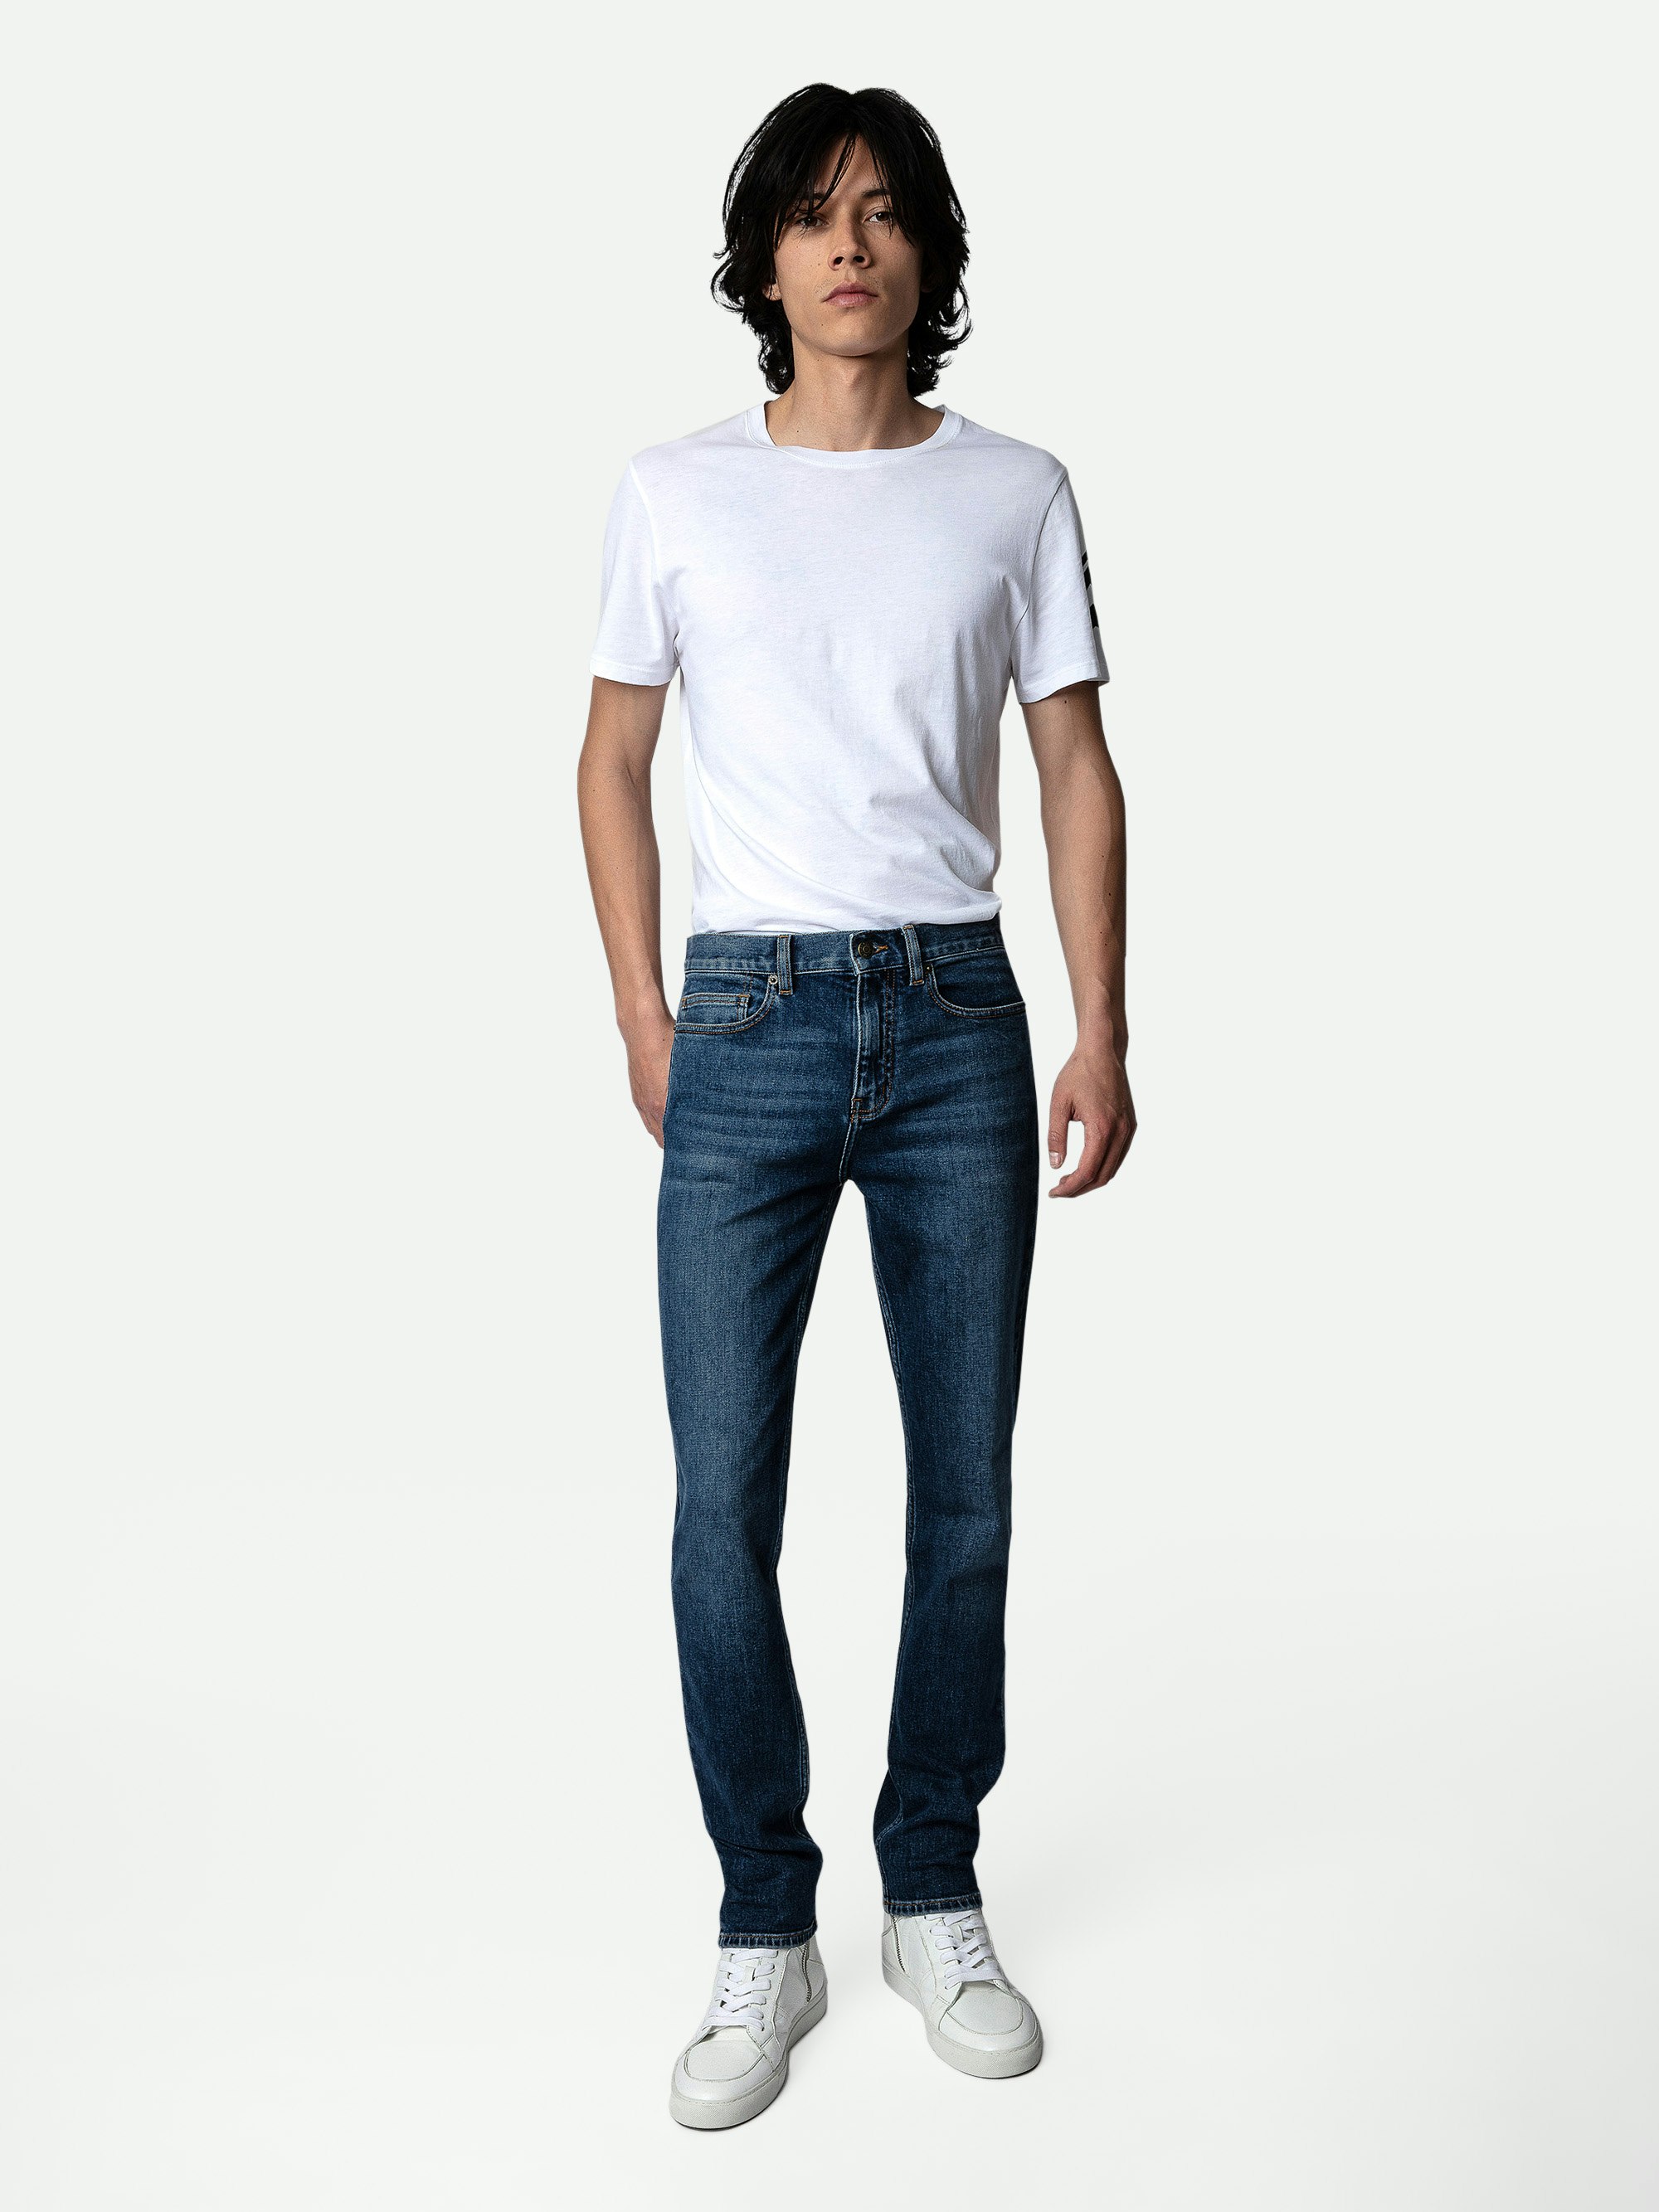 Steeve Jeans - Men’s regular-fit blue denim jeans